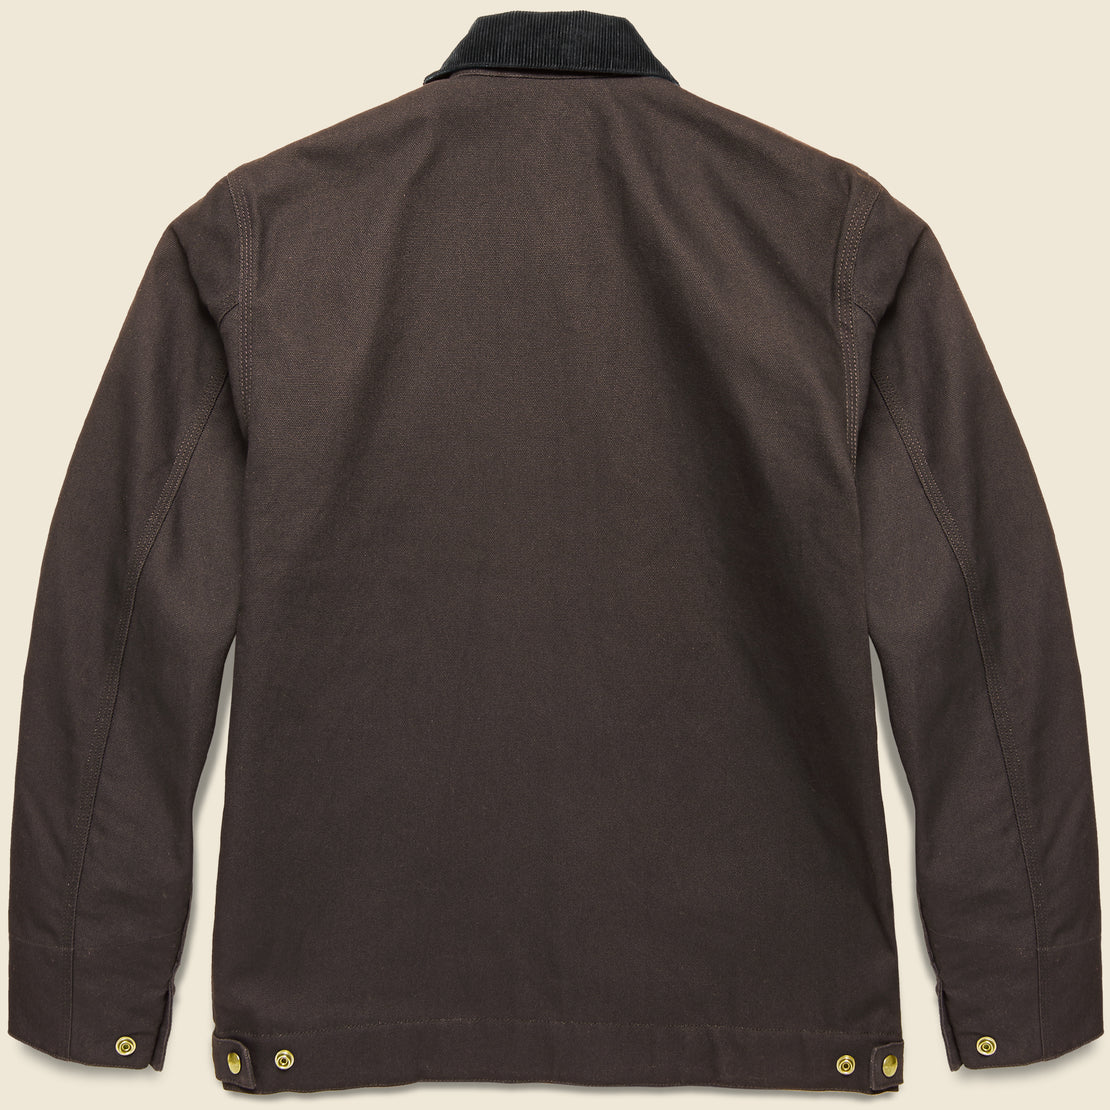 Carhartt Wip Detroit jacket - Tobacco / Black rigid